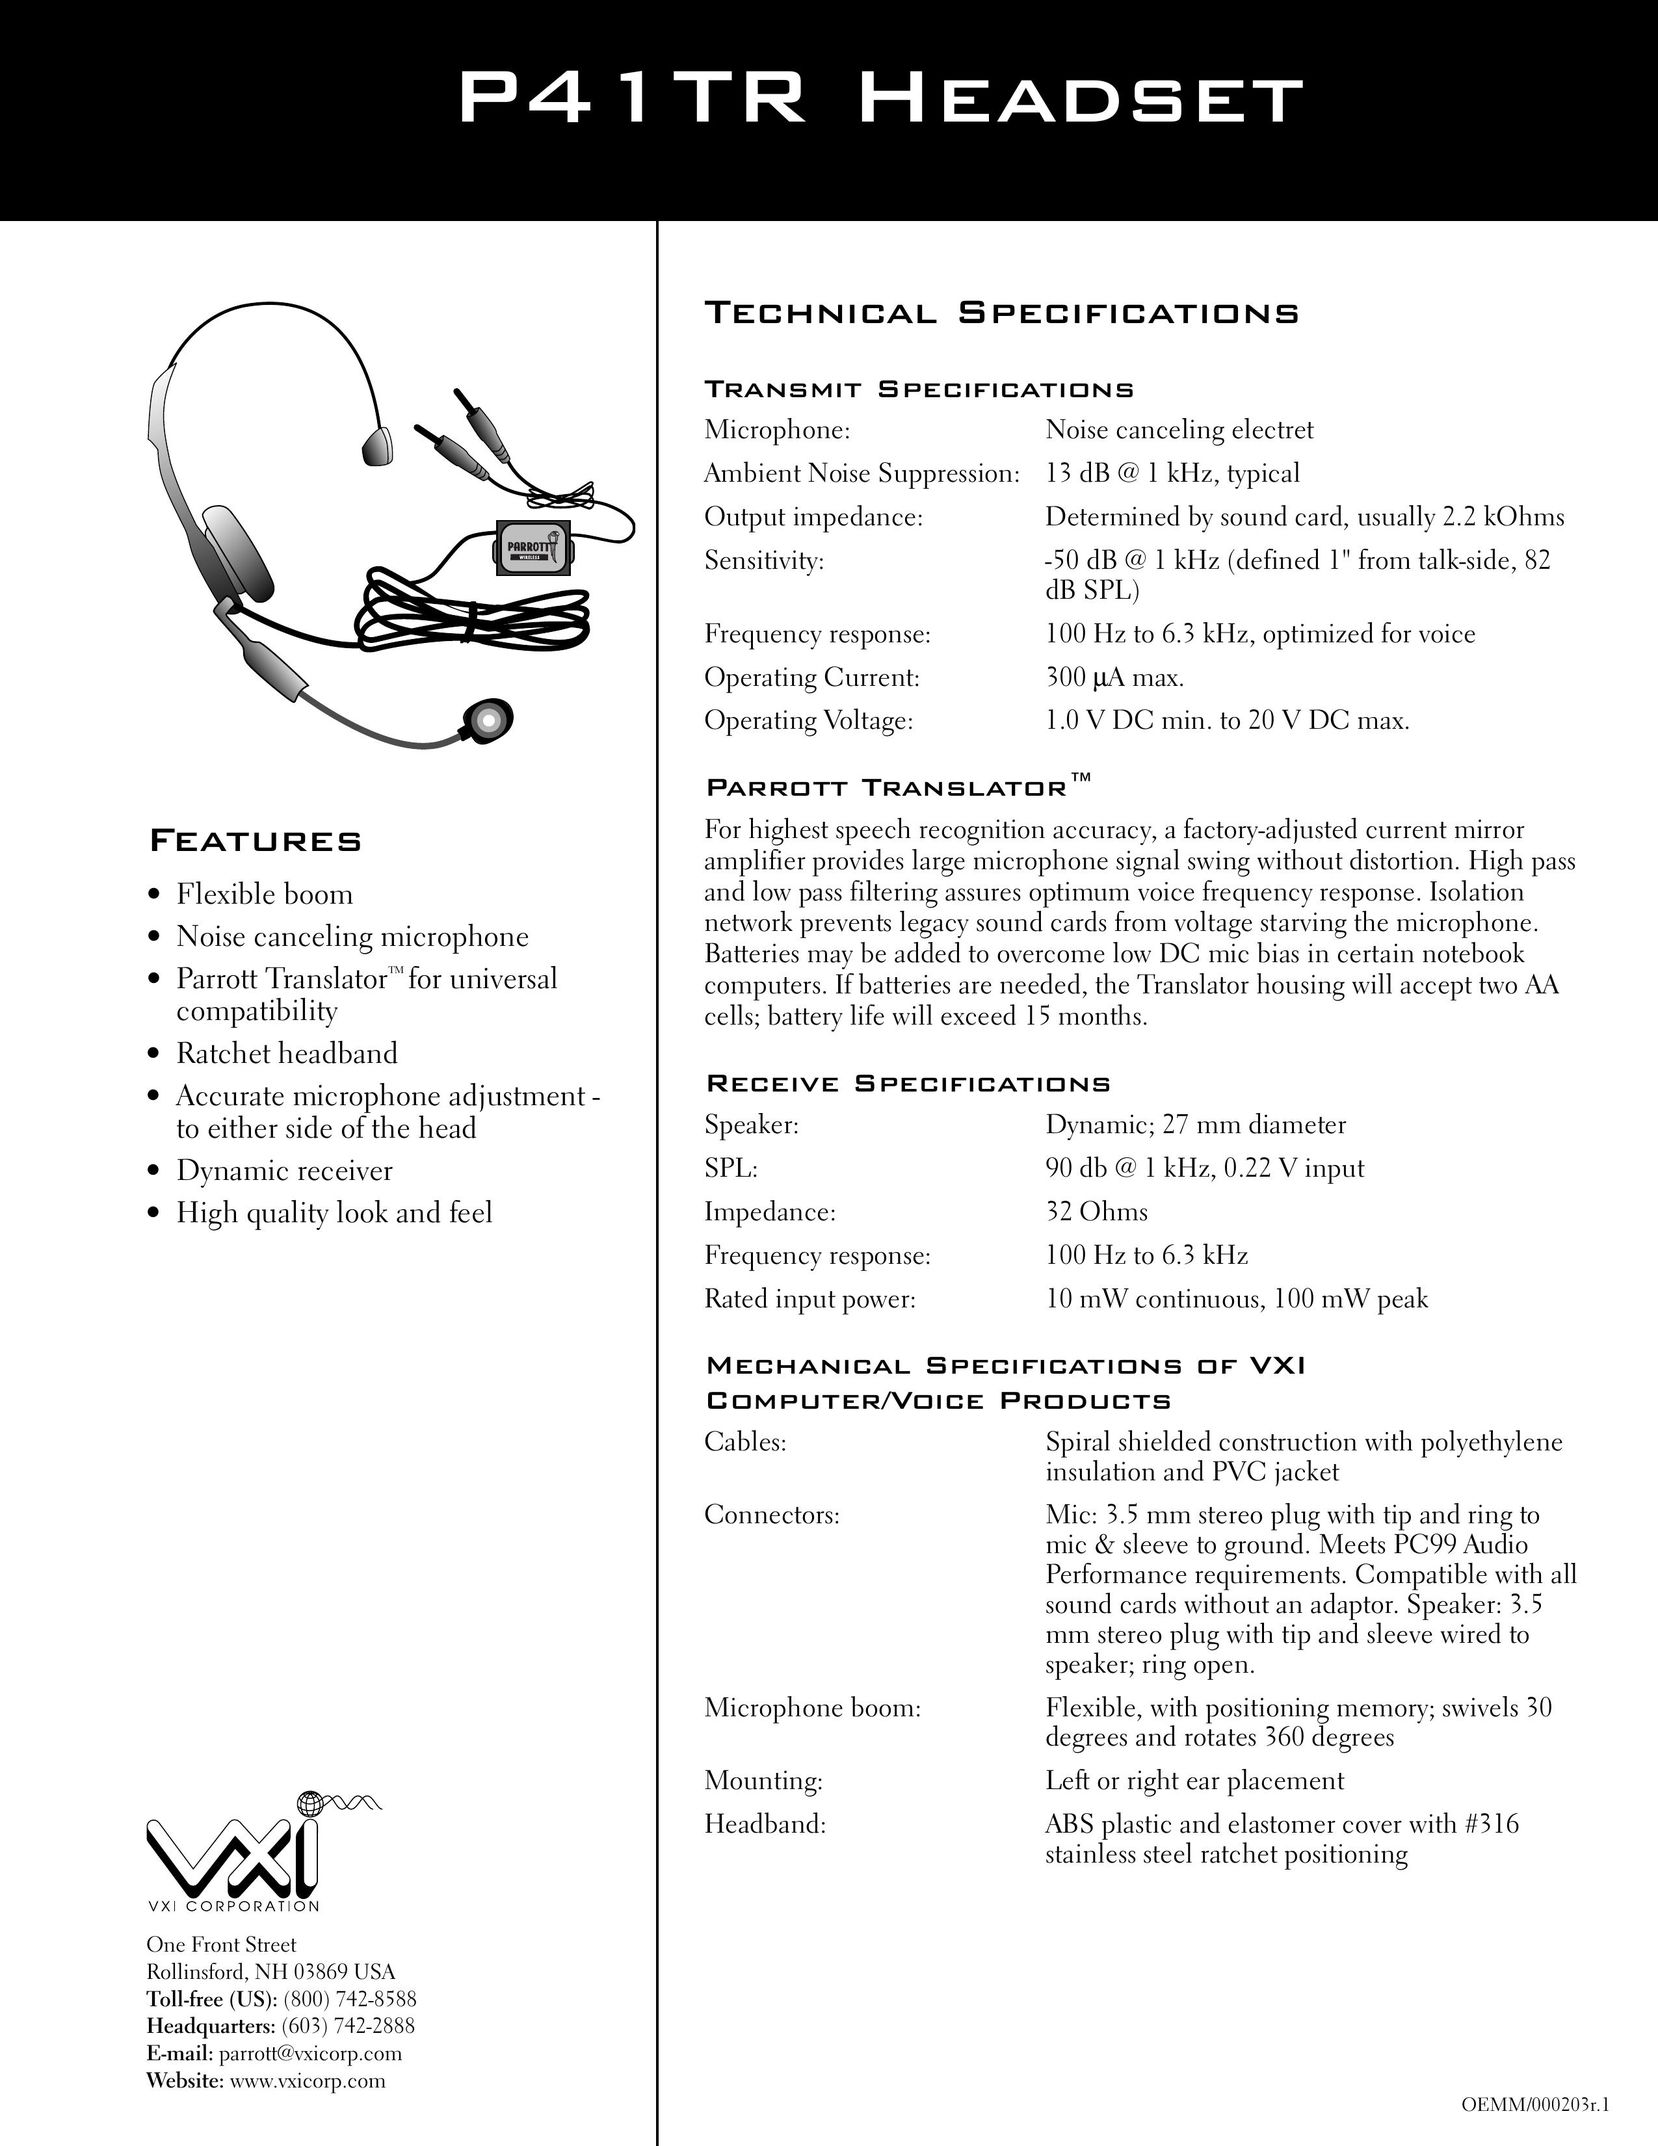 VXI P41TR Headphones User Manual